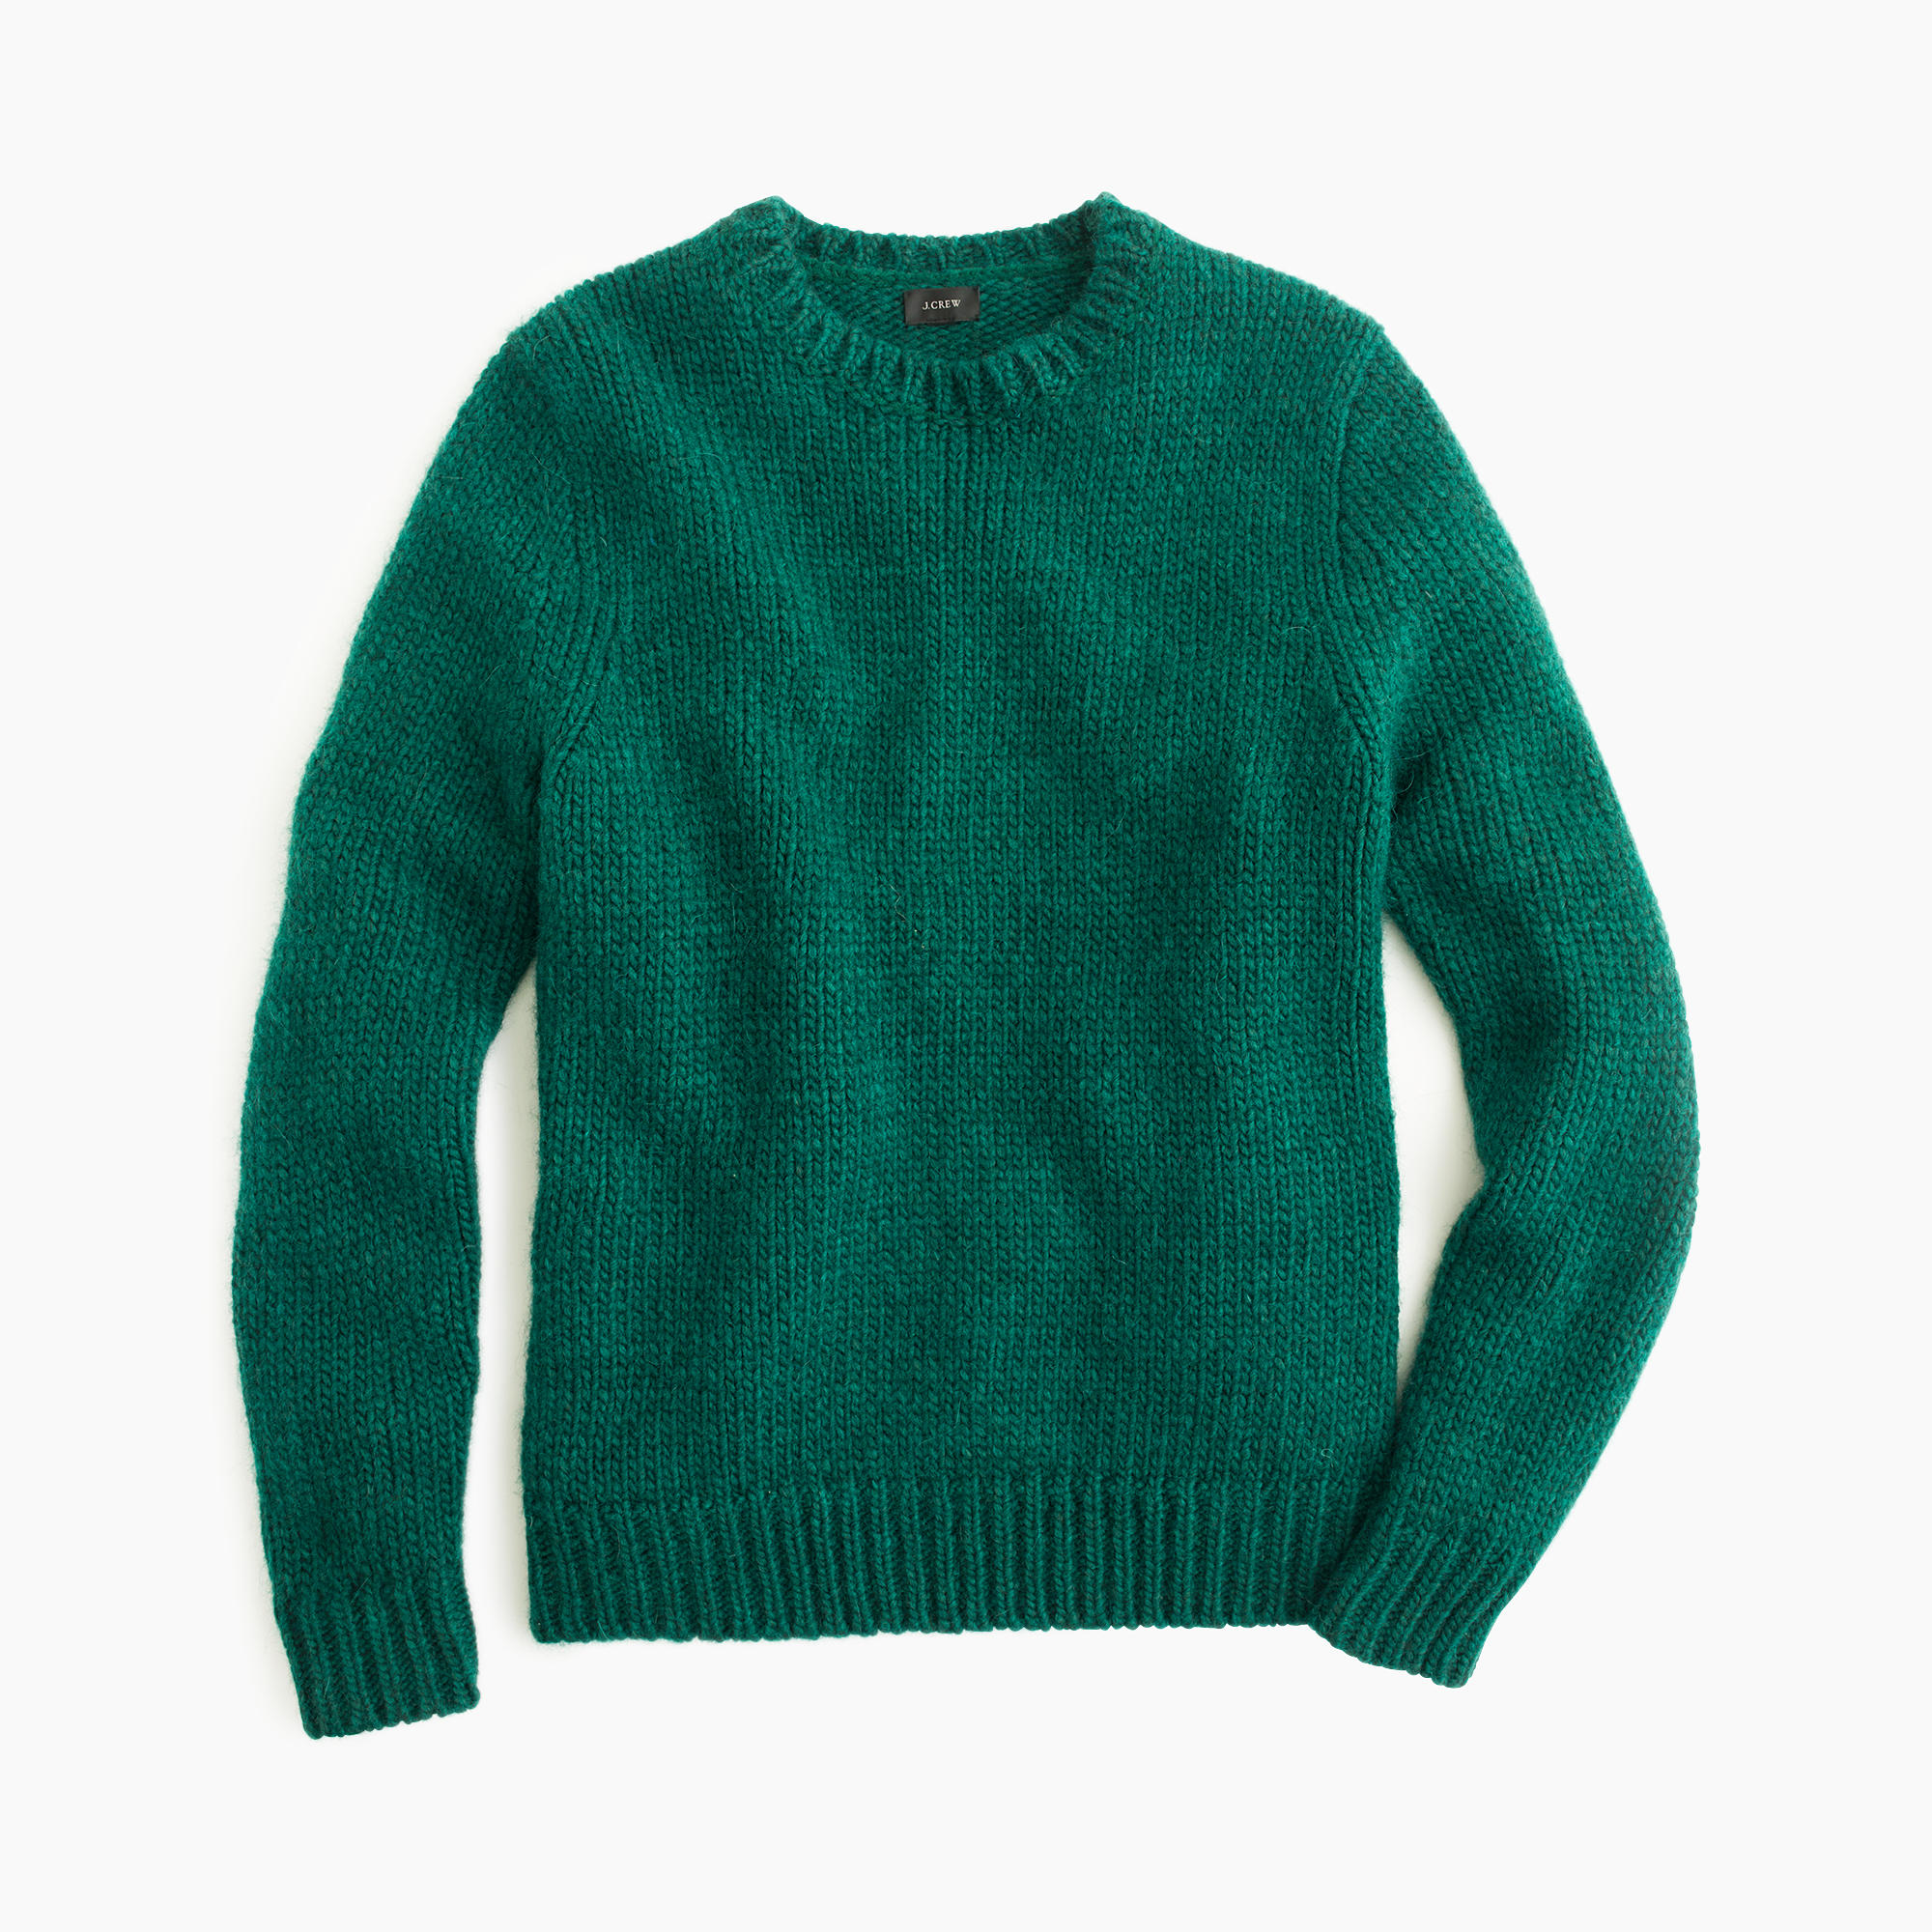 J.Crew Italian Wool Crewneck Sweater in Green for Men - Lyst